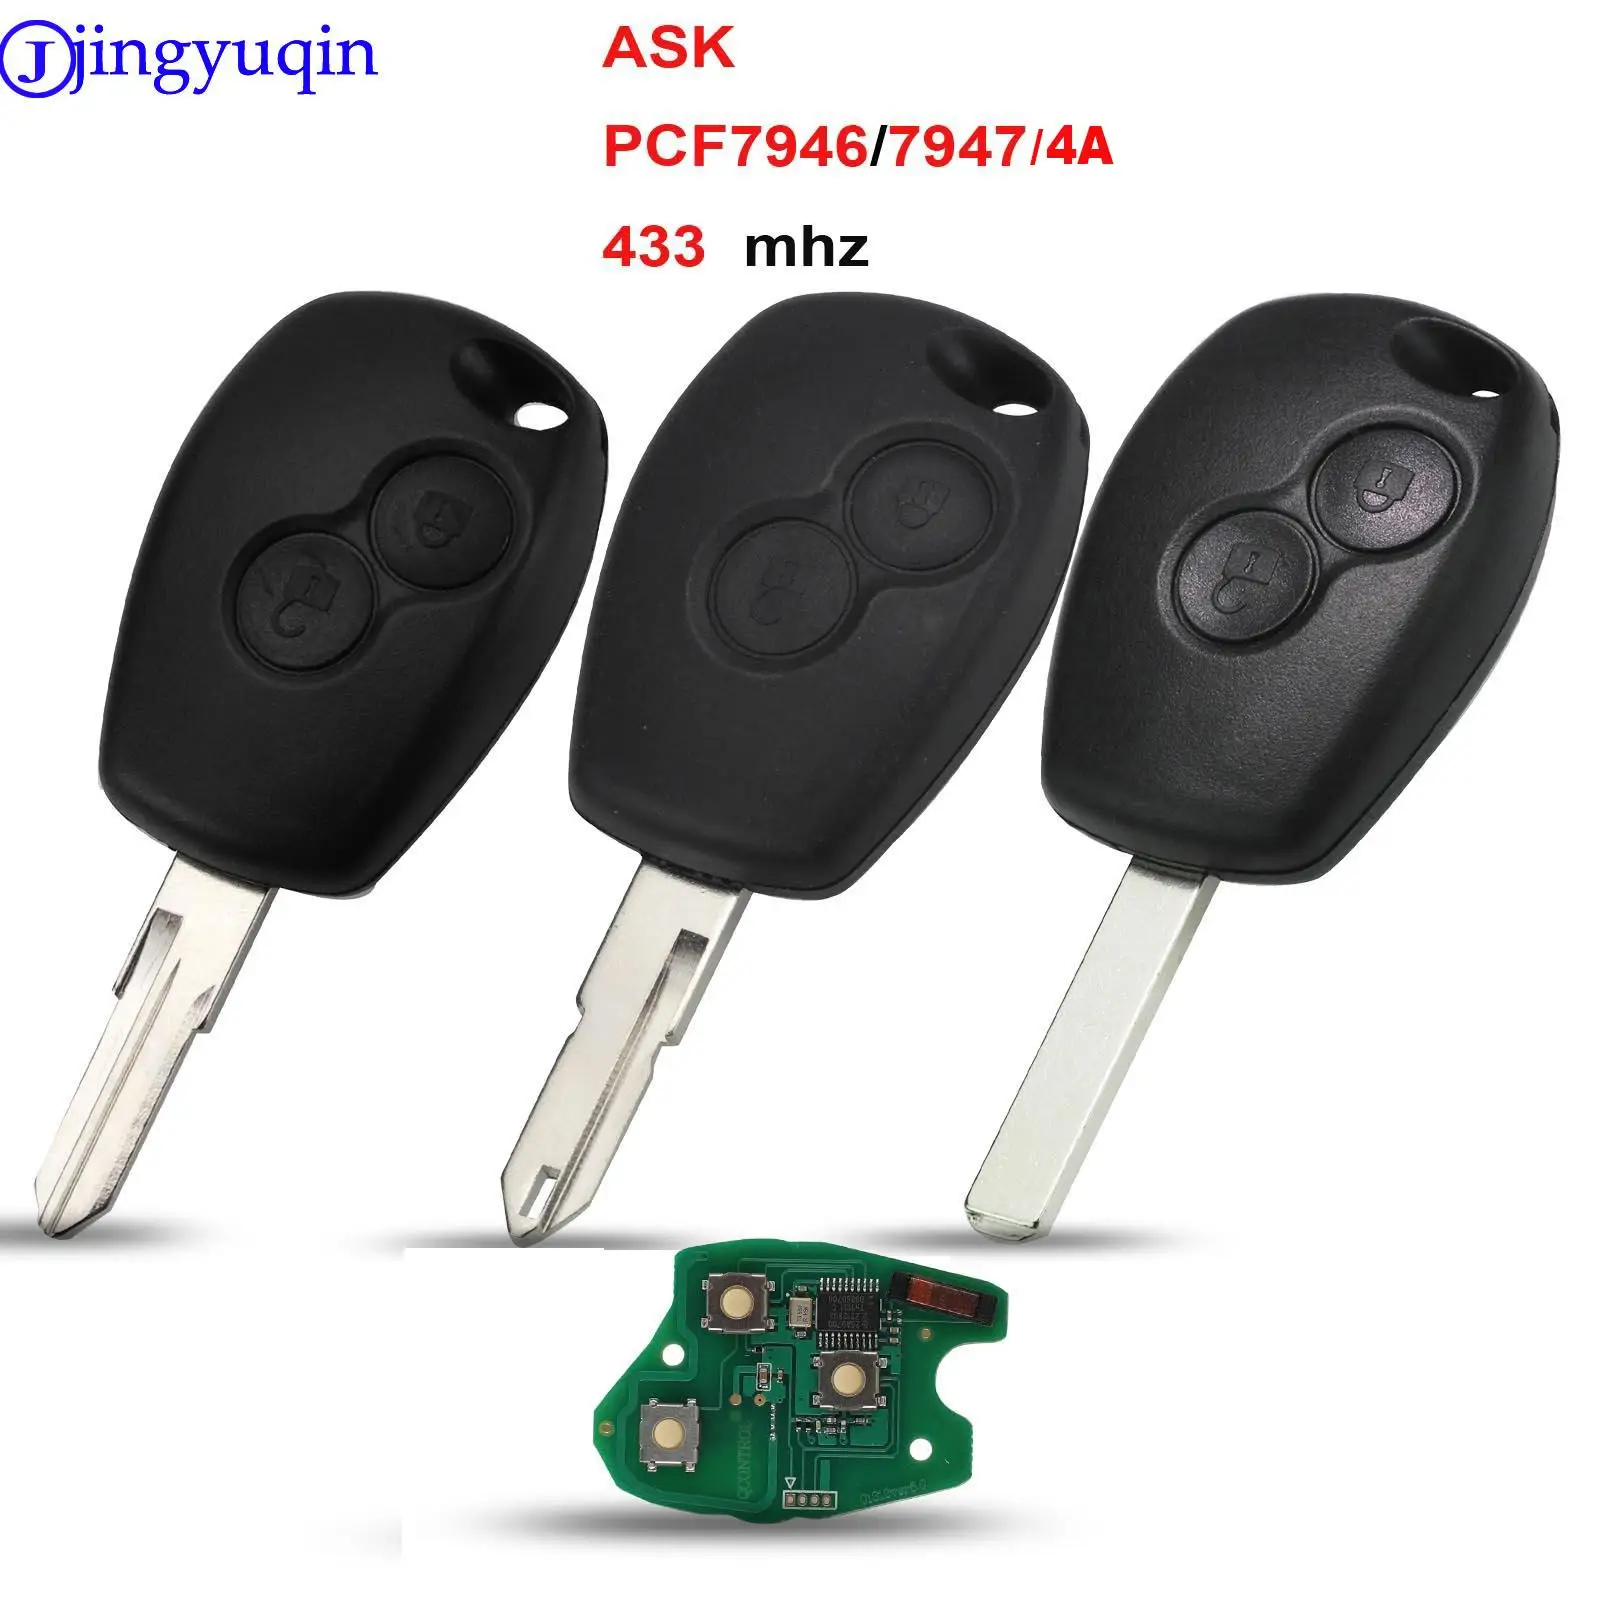 jingyuqin 2 Buttons Remote Key For Renault Duster Modus Clio 3 Twingo DACIA Logan Sandero Kangoo 433MHz PCF7947/7946/4A Chip